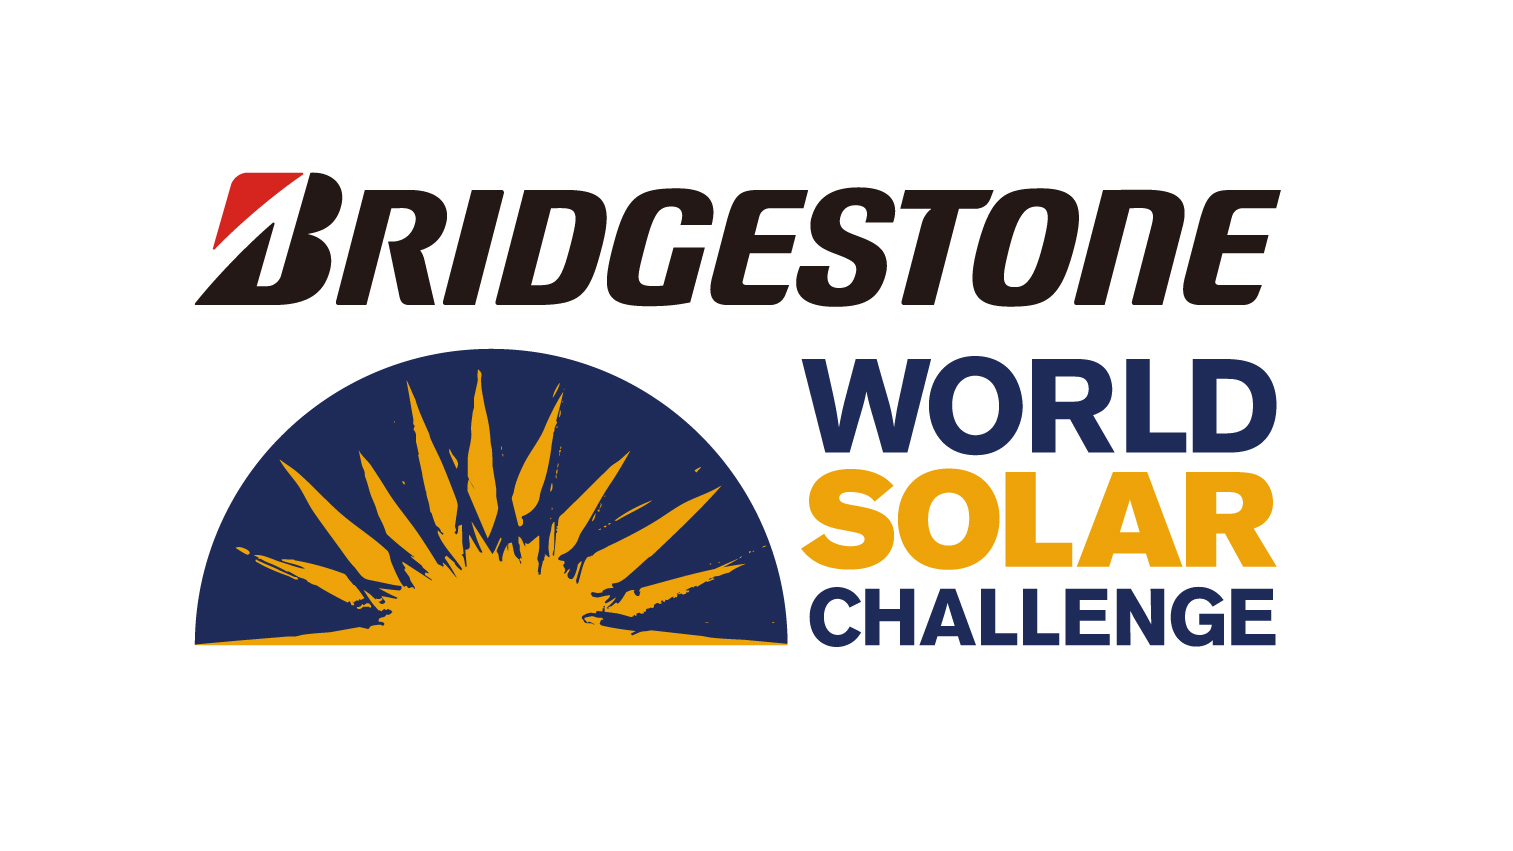 Bridgestone World Solar Challenge logo